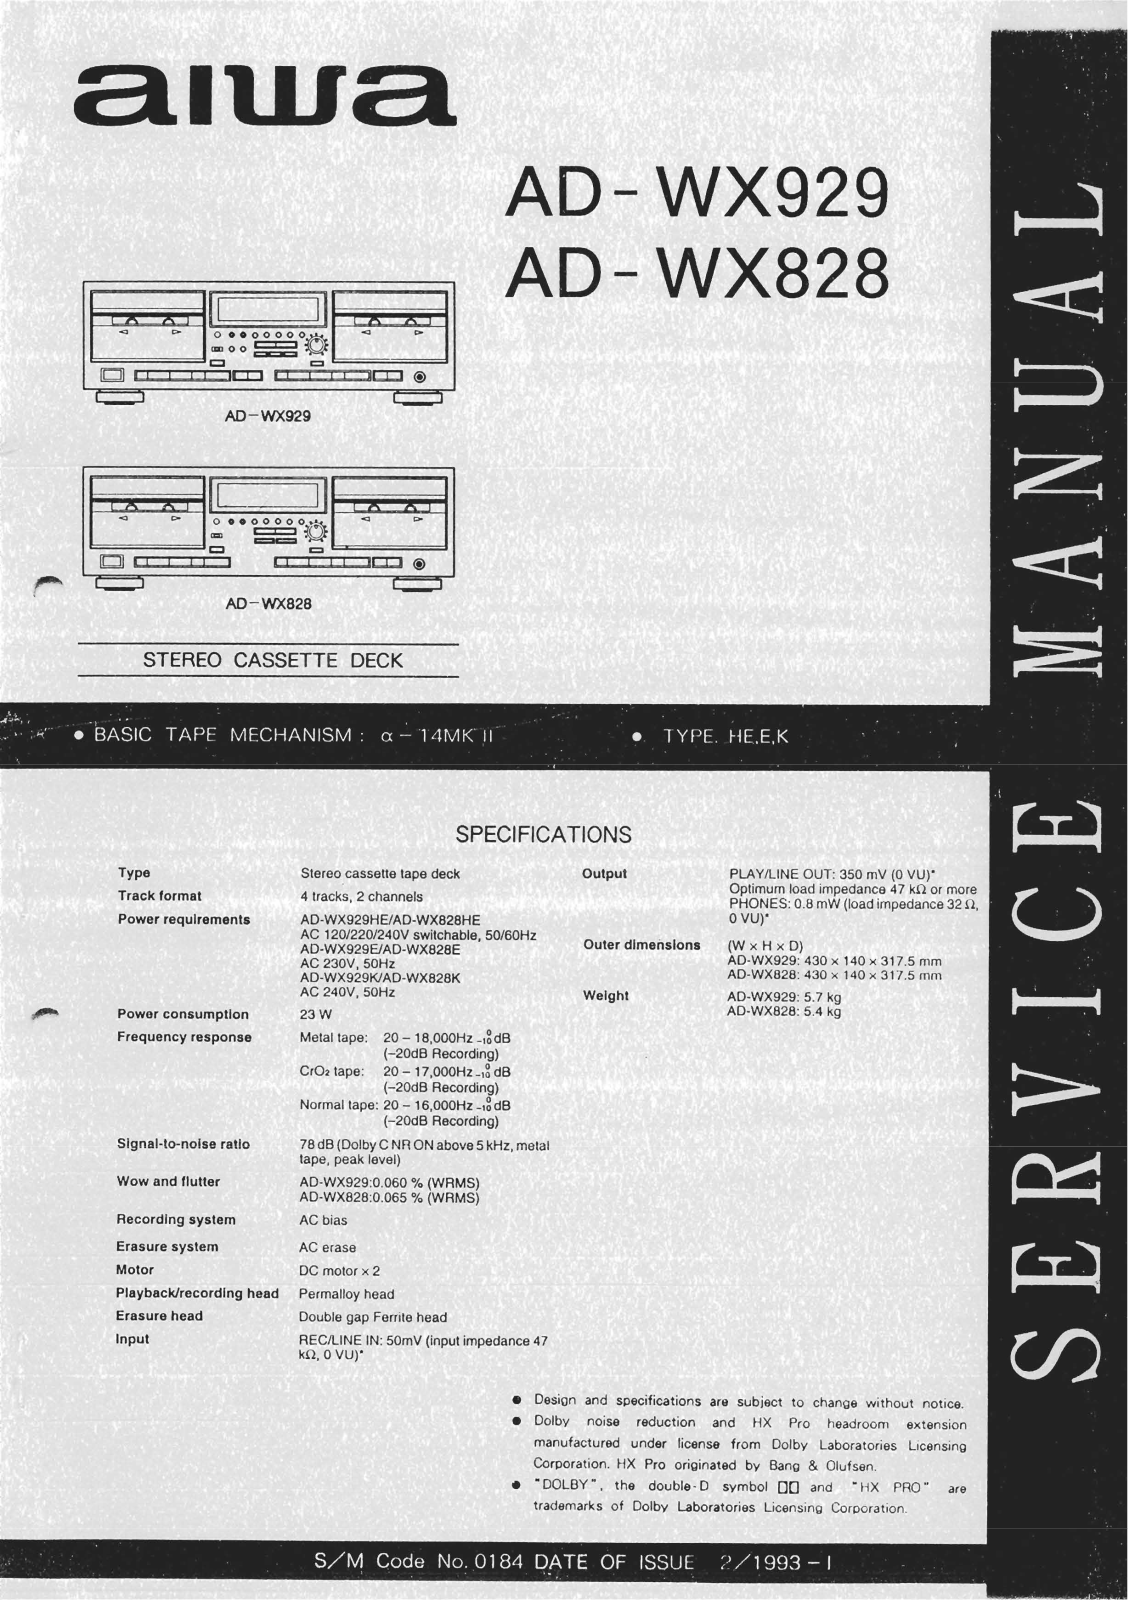 Aiwa AD-WX929, AD-WX828 Service Manual